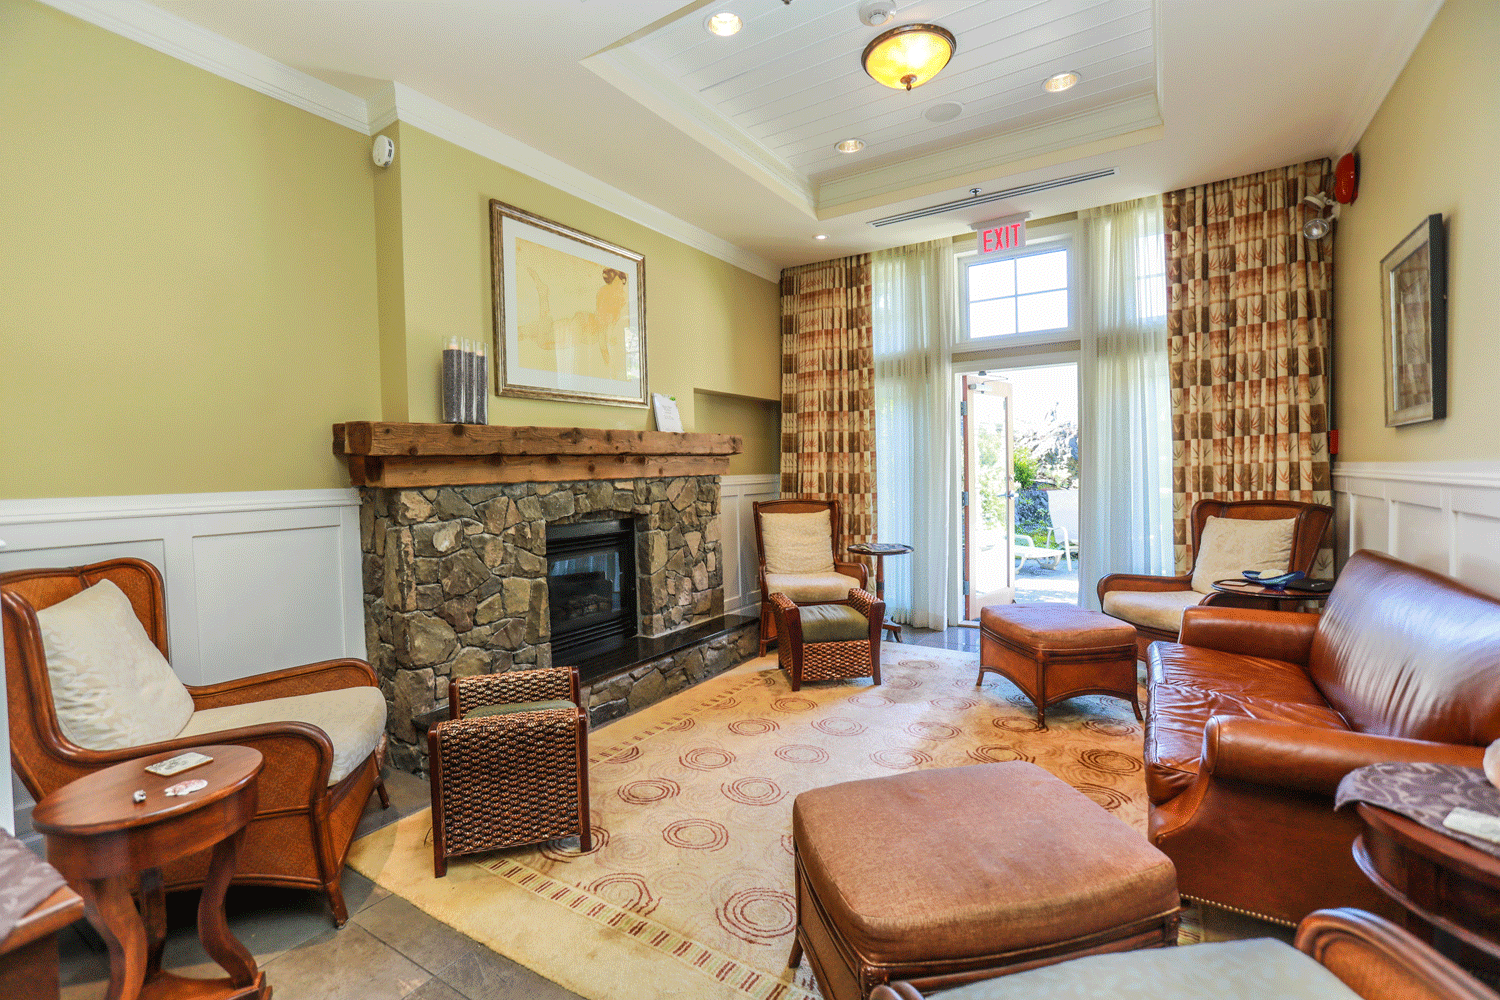 cozy lobby area with fireplace